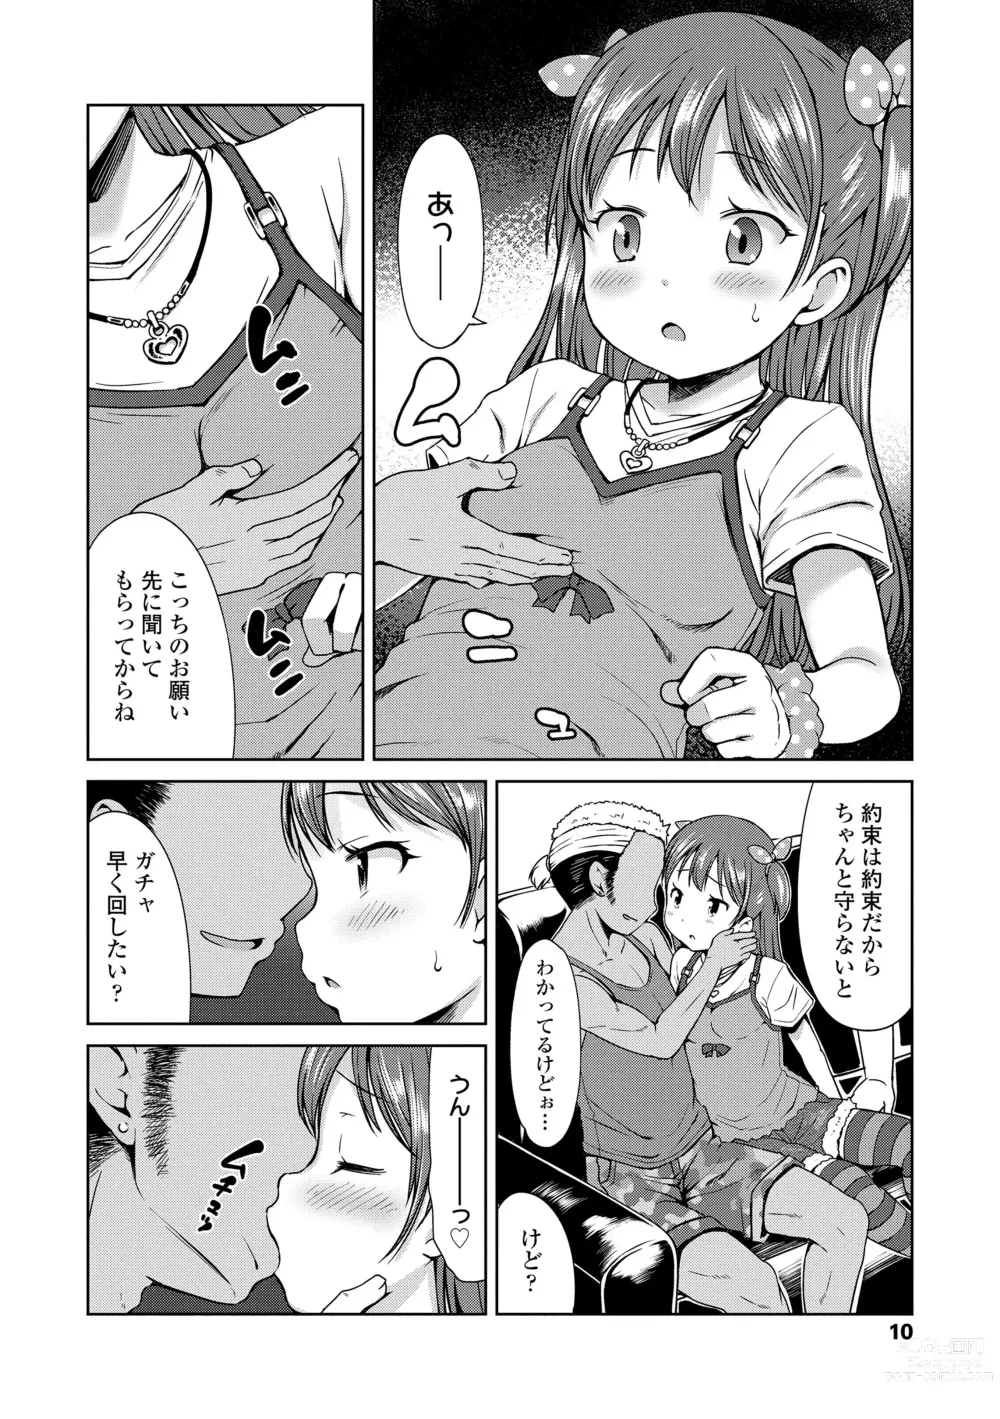 Page 10 of manga Ippai Asobo!